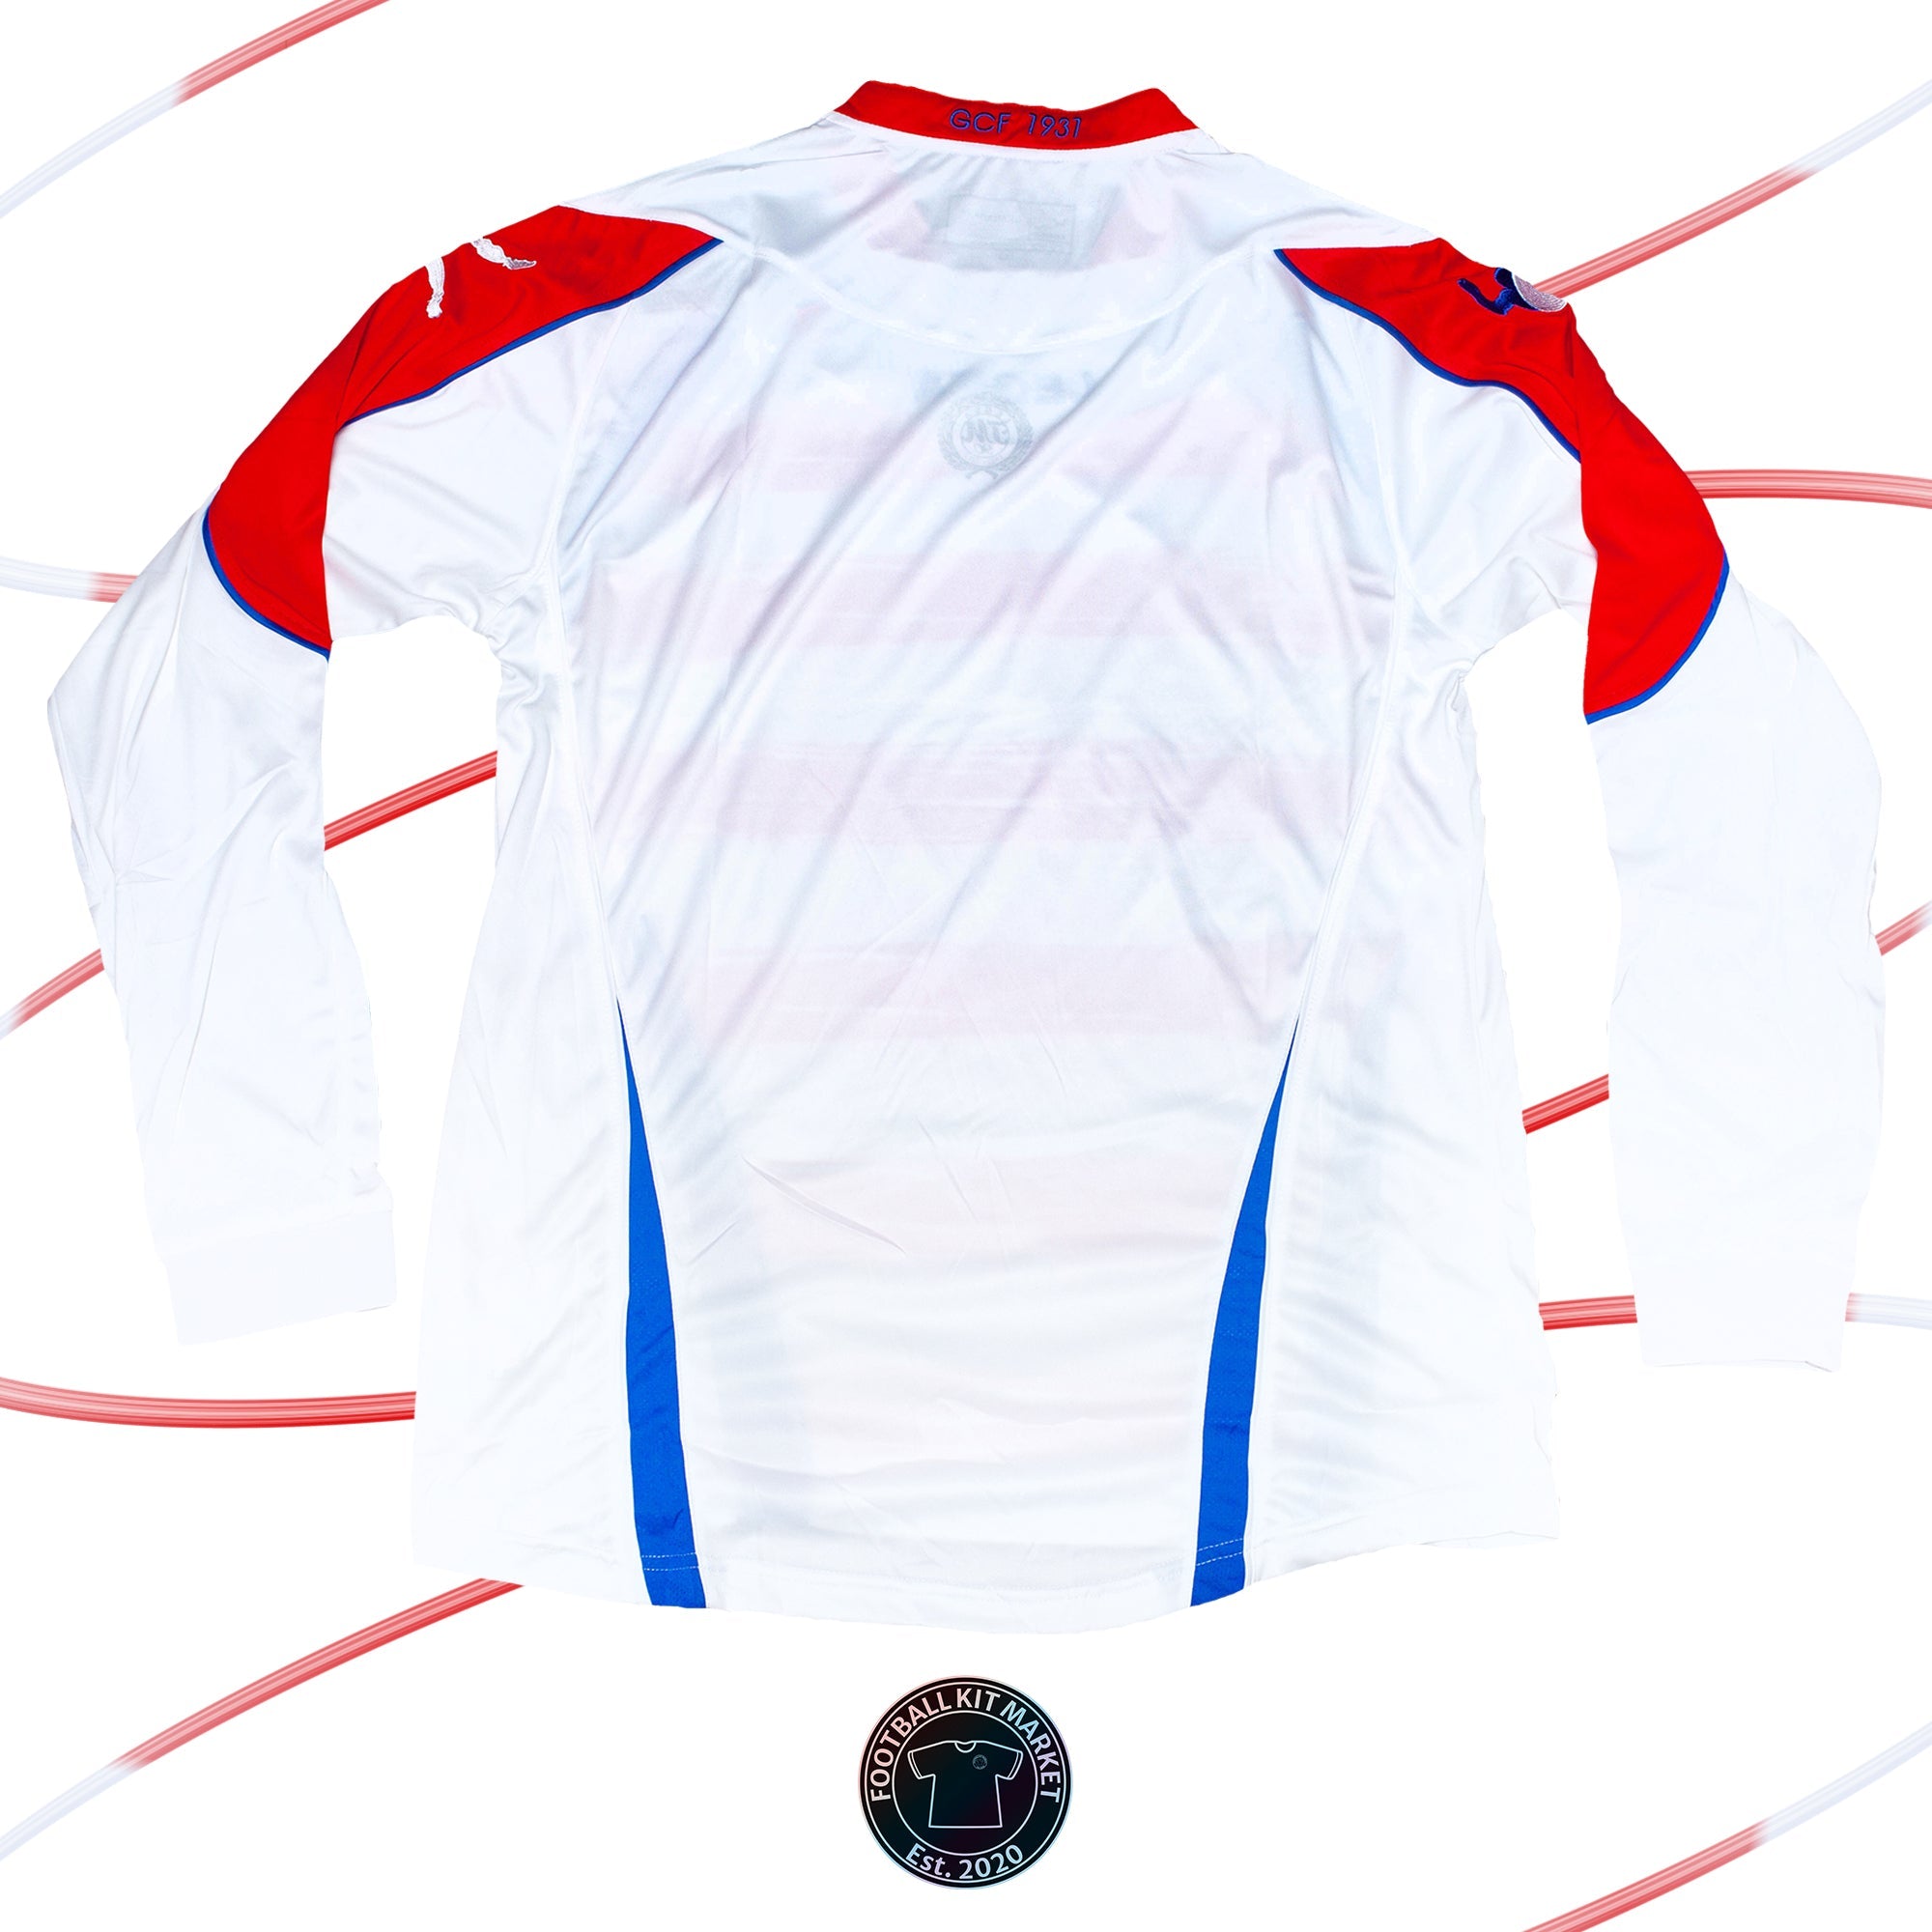 Genuine GRANADA Special Edition Shirt (2012-2013) - LEGEA (L) - Product Image from Football Kit Market